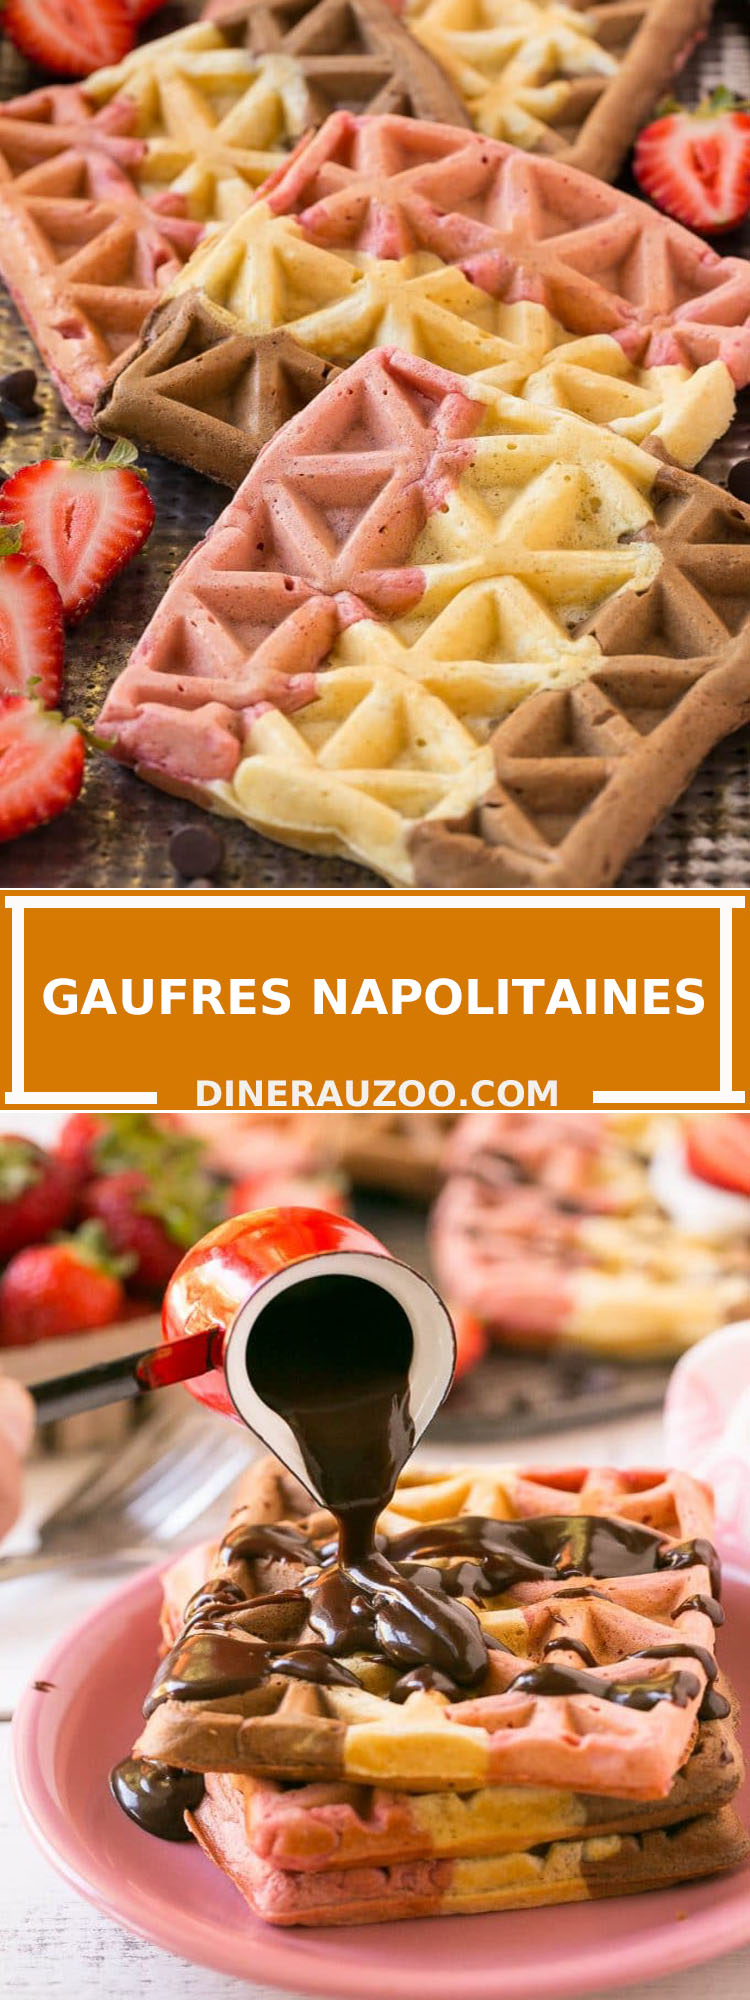 Gaufres Napolitaines1